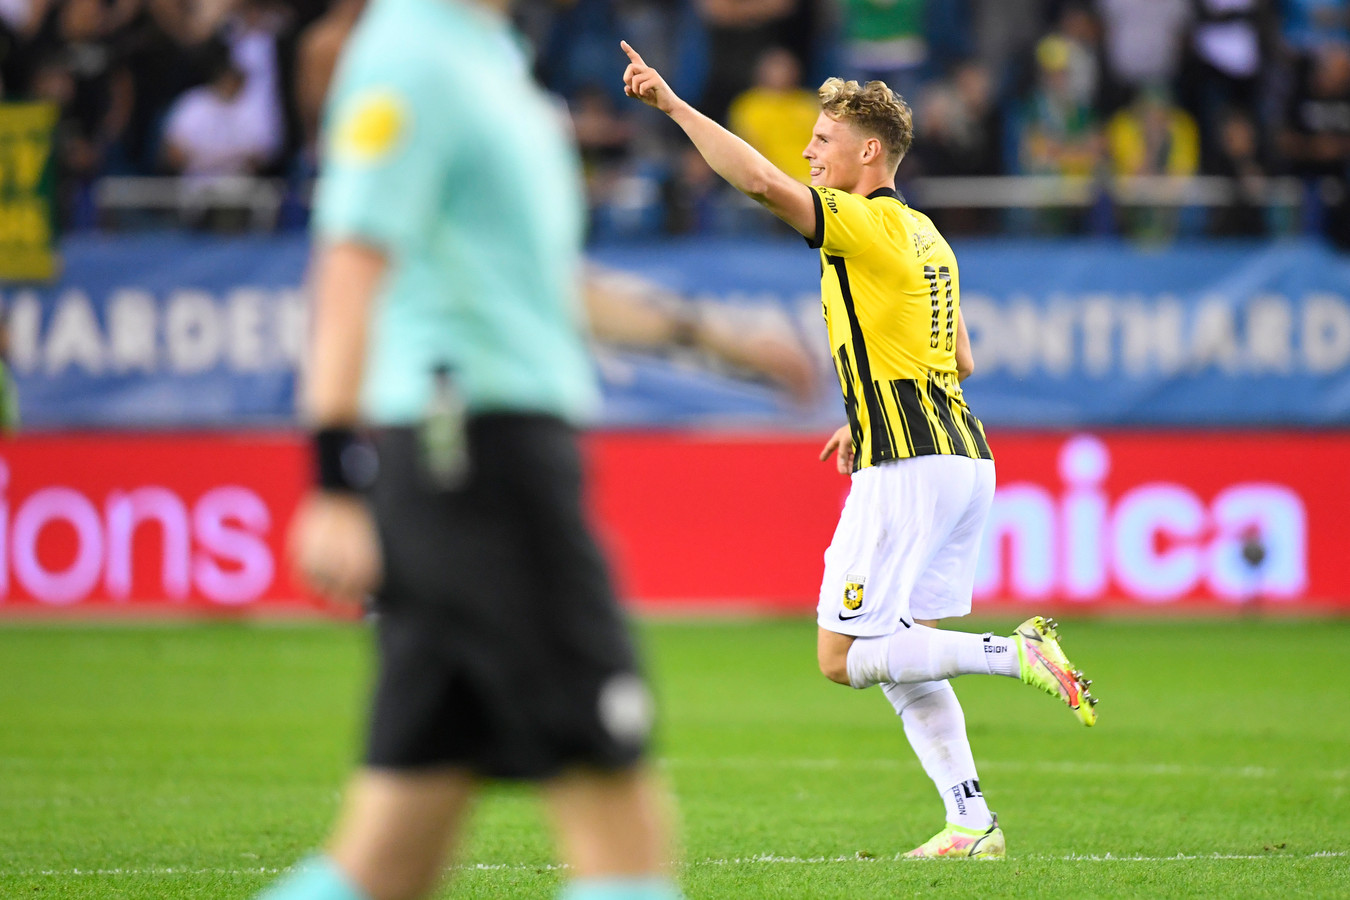 Nikolai Baden Frederiksen loopt juichend weg na zijn goal tegen Fortuna Sittard.